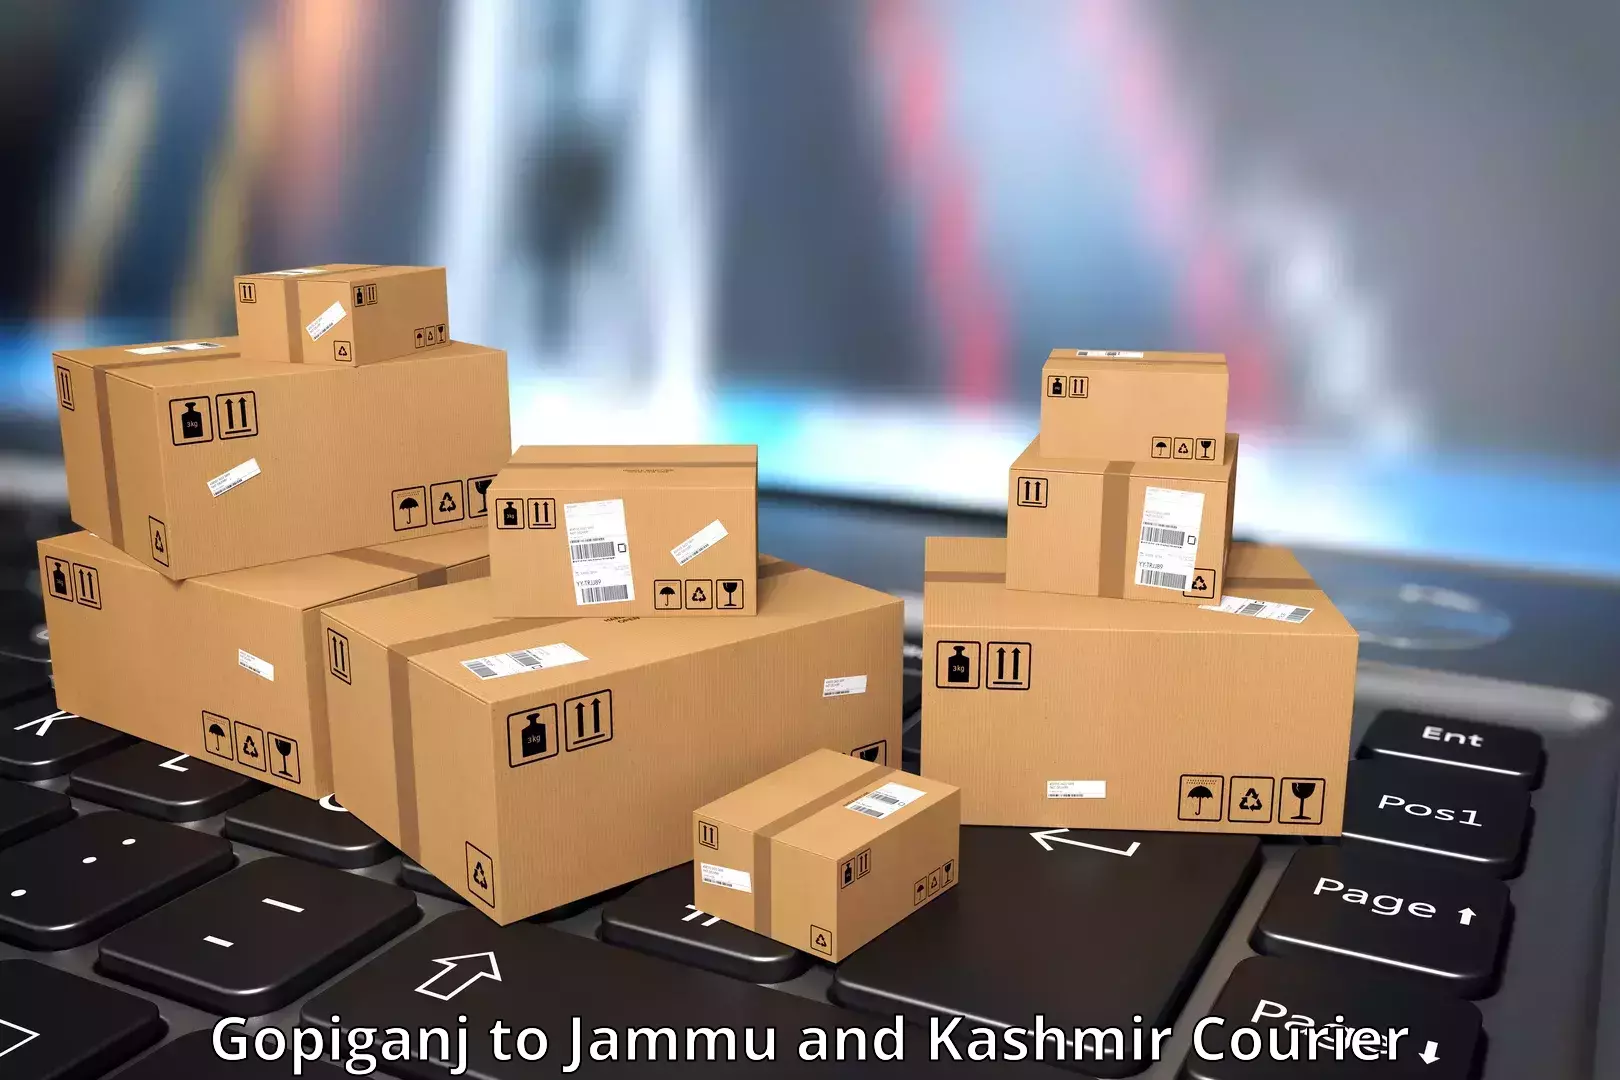 Courier dispatch services Gopiganj to Srinagar Kashmir